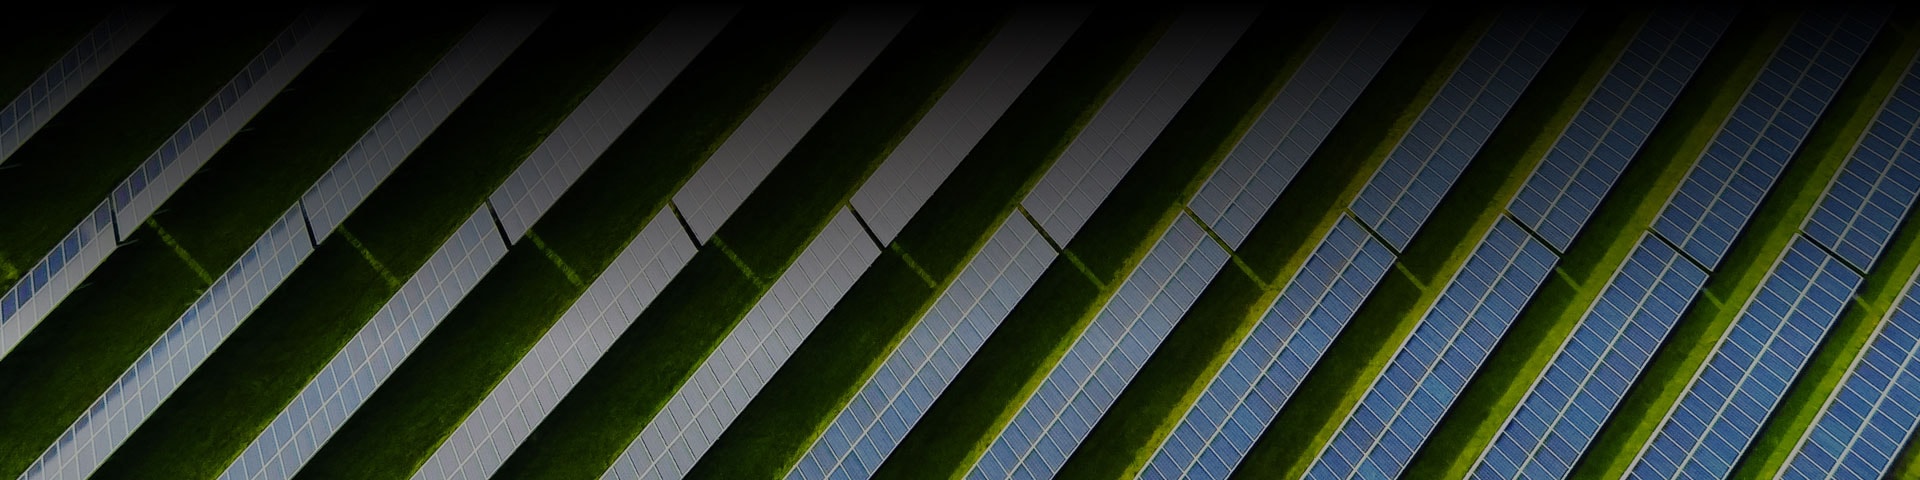 Ariel view of solar panels on solar energy farm